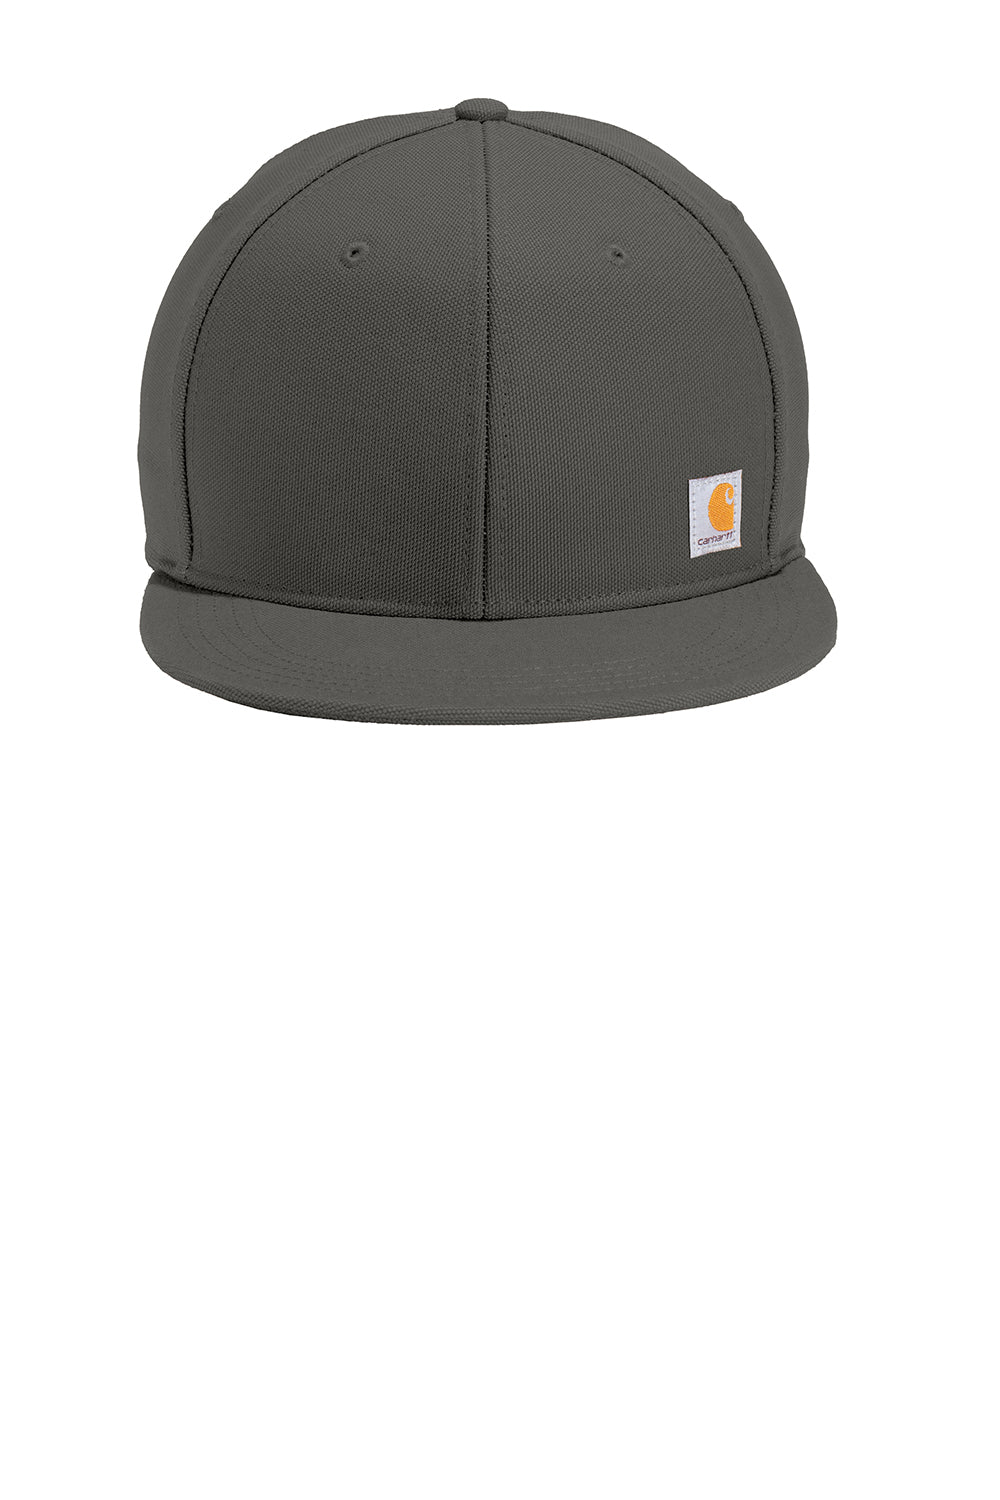 Carhartt CT101604 Mens Ashland FastDry Moisture Wicking Adjustable Hat Gravel Grey Flat Front